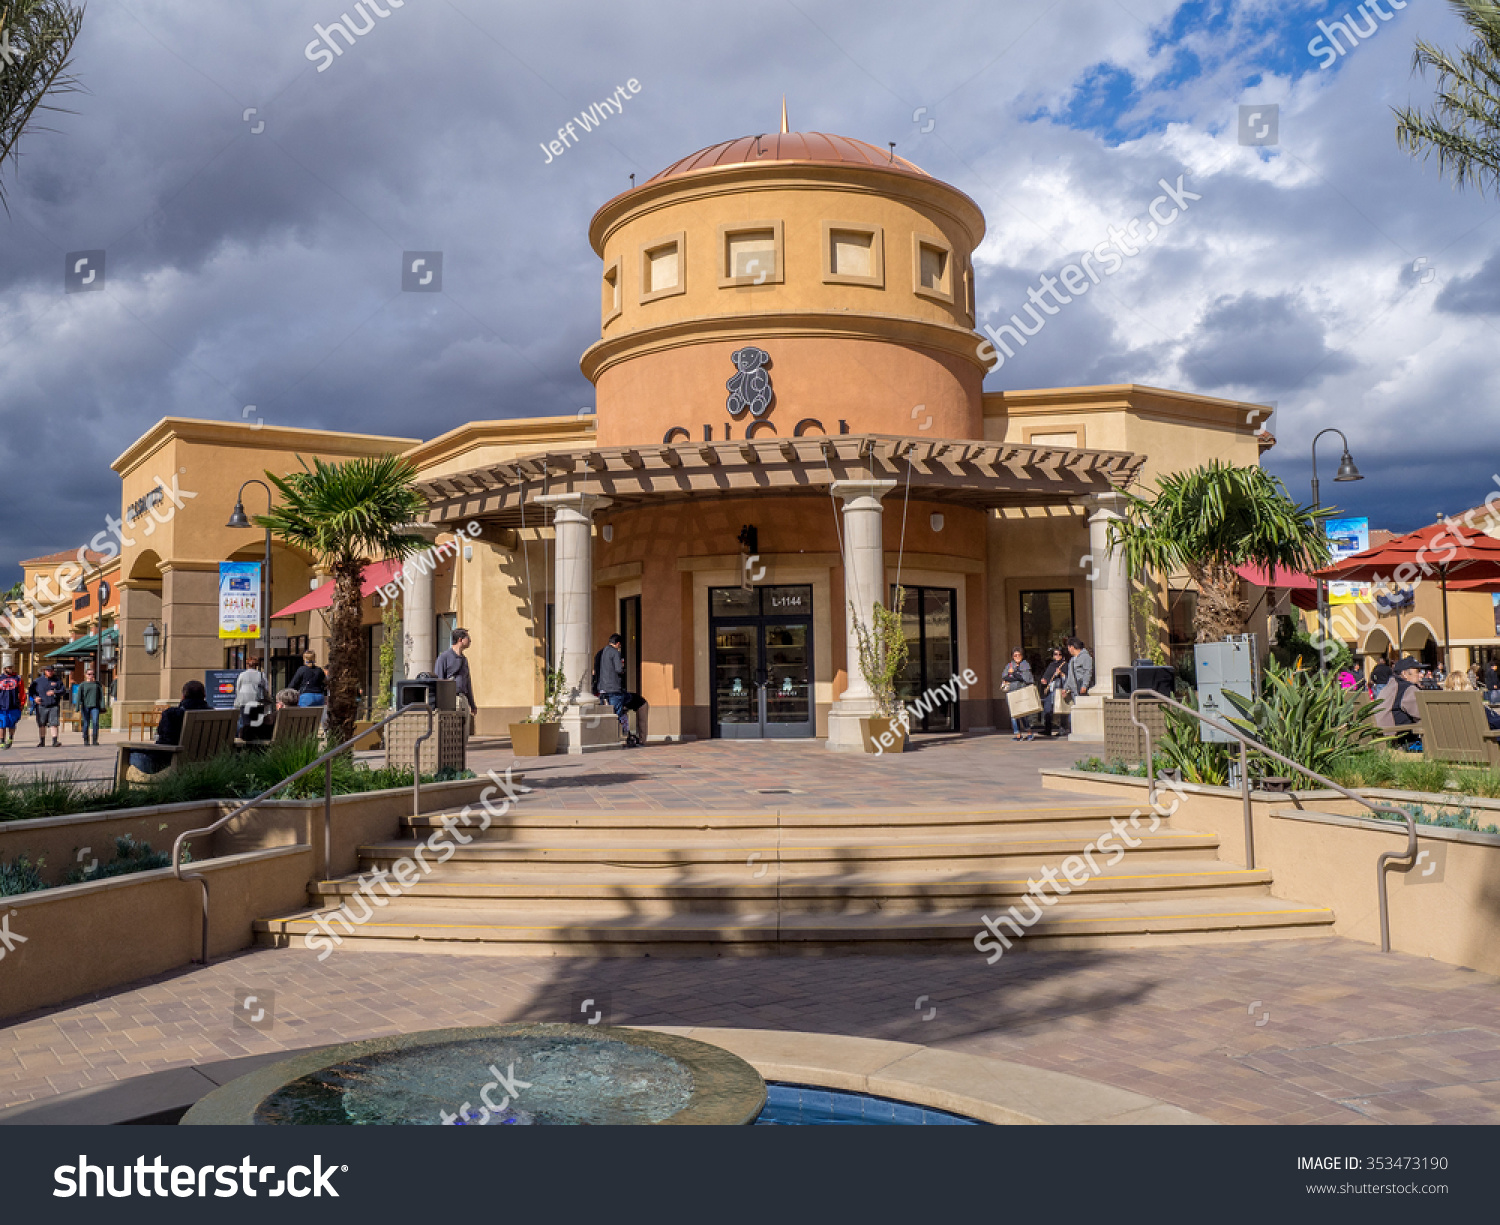 Cabazon Ca Nov 2015 Desert Hills Stock Photo 353473190 - Shutterstock